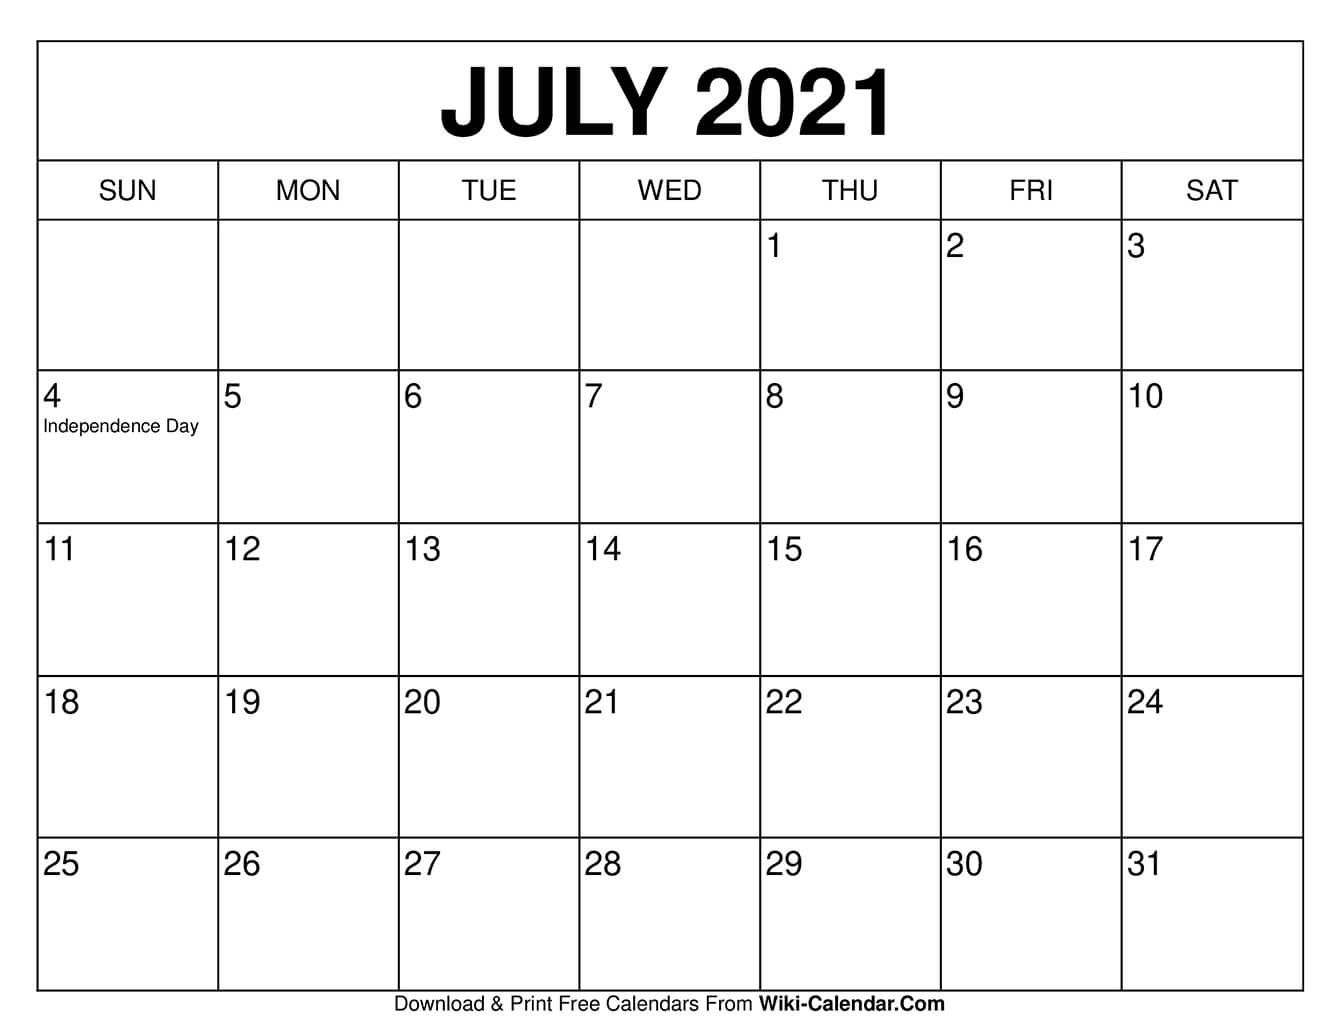 July 2021 Calendar In 2020 | Free Calendars To Print, Blank